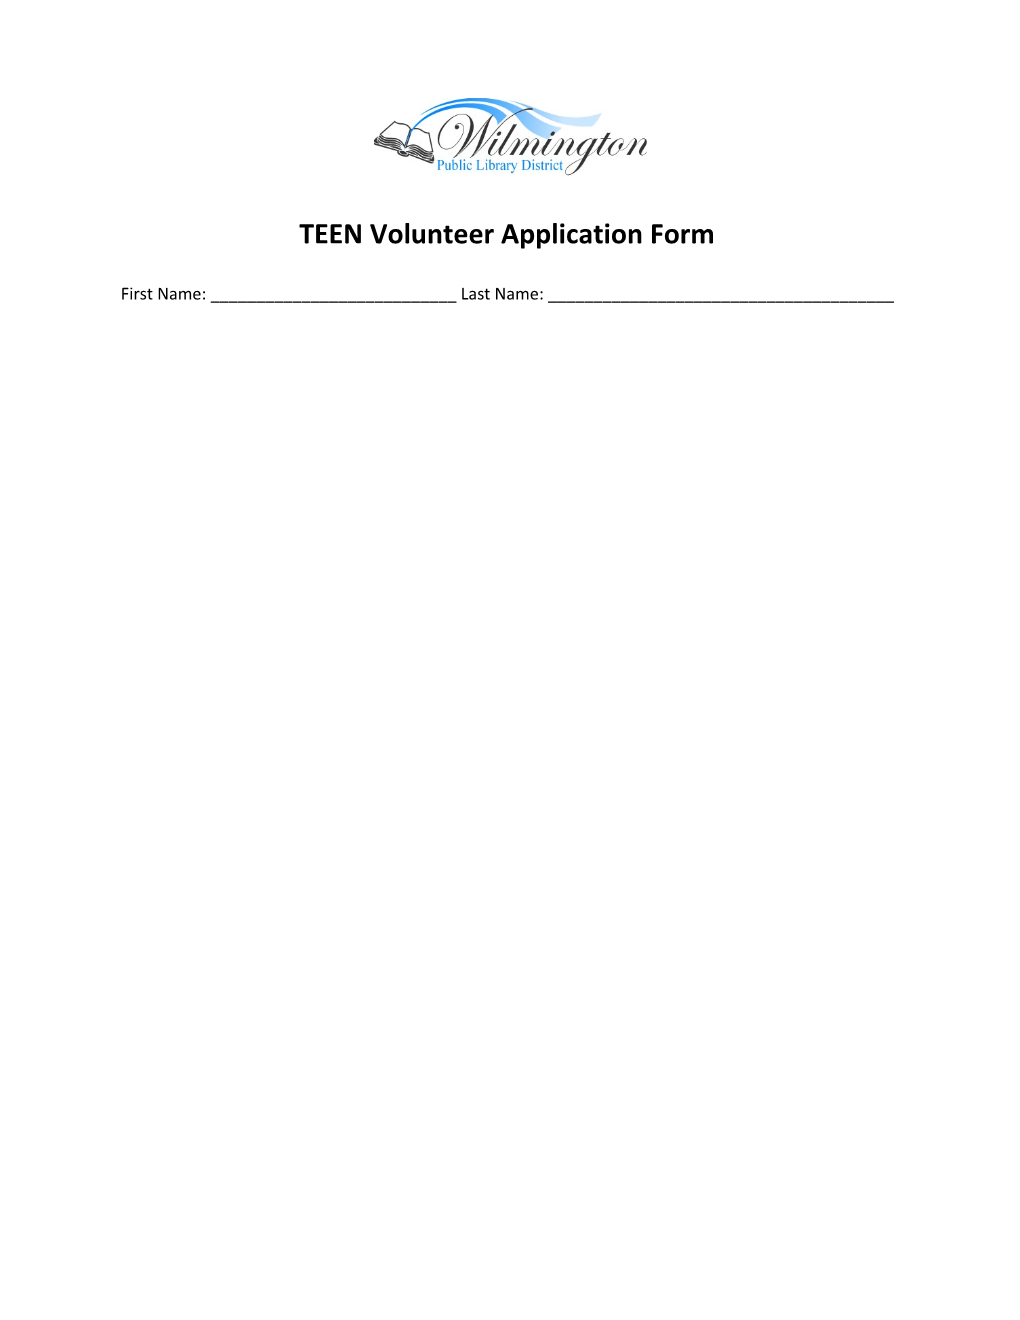 TEEN Volunteer Application Form